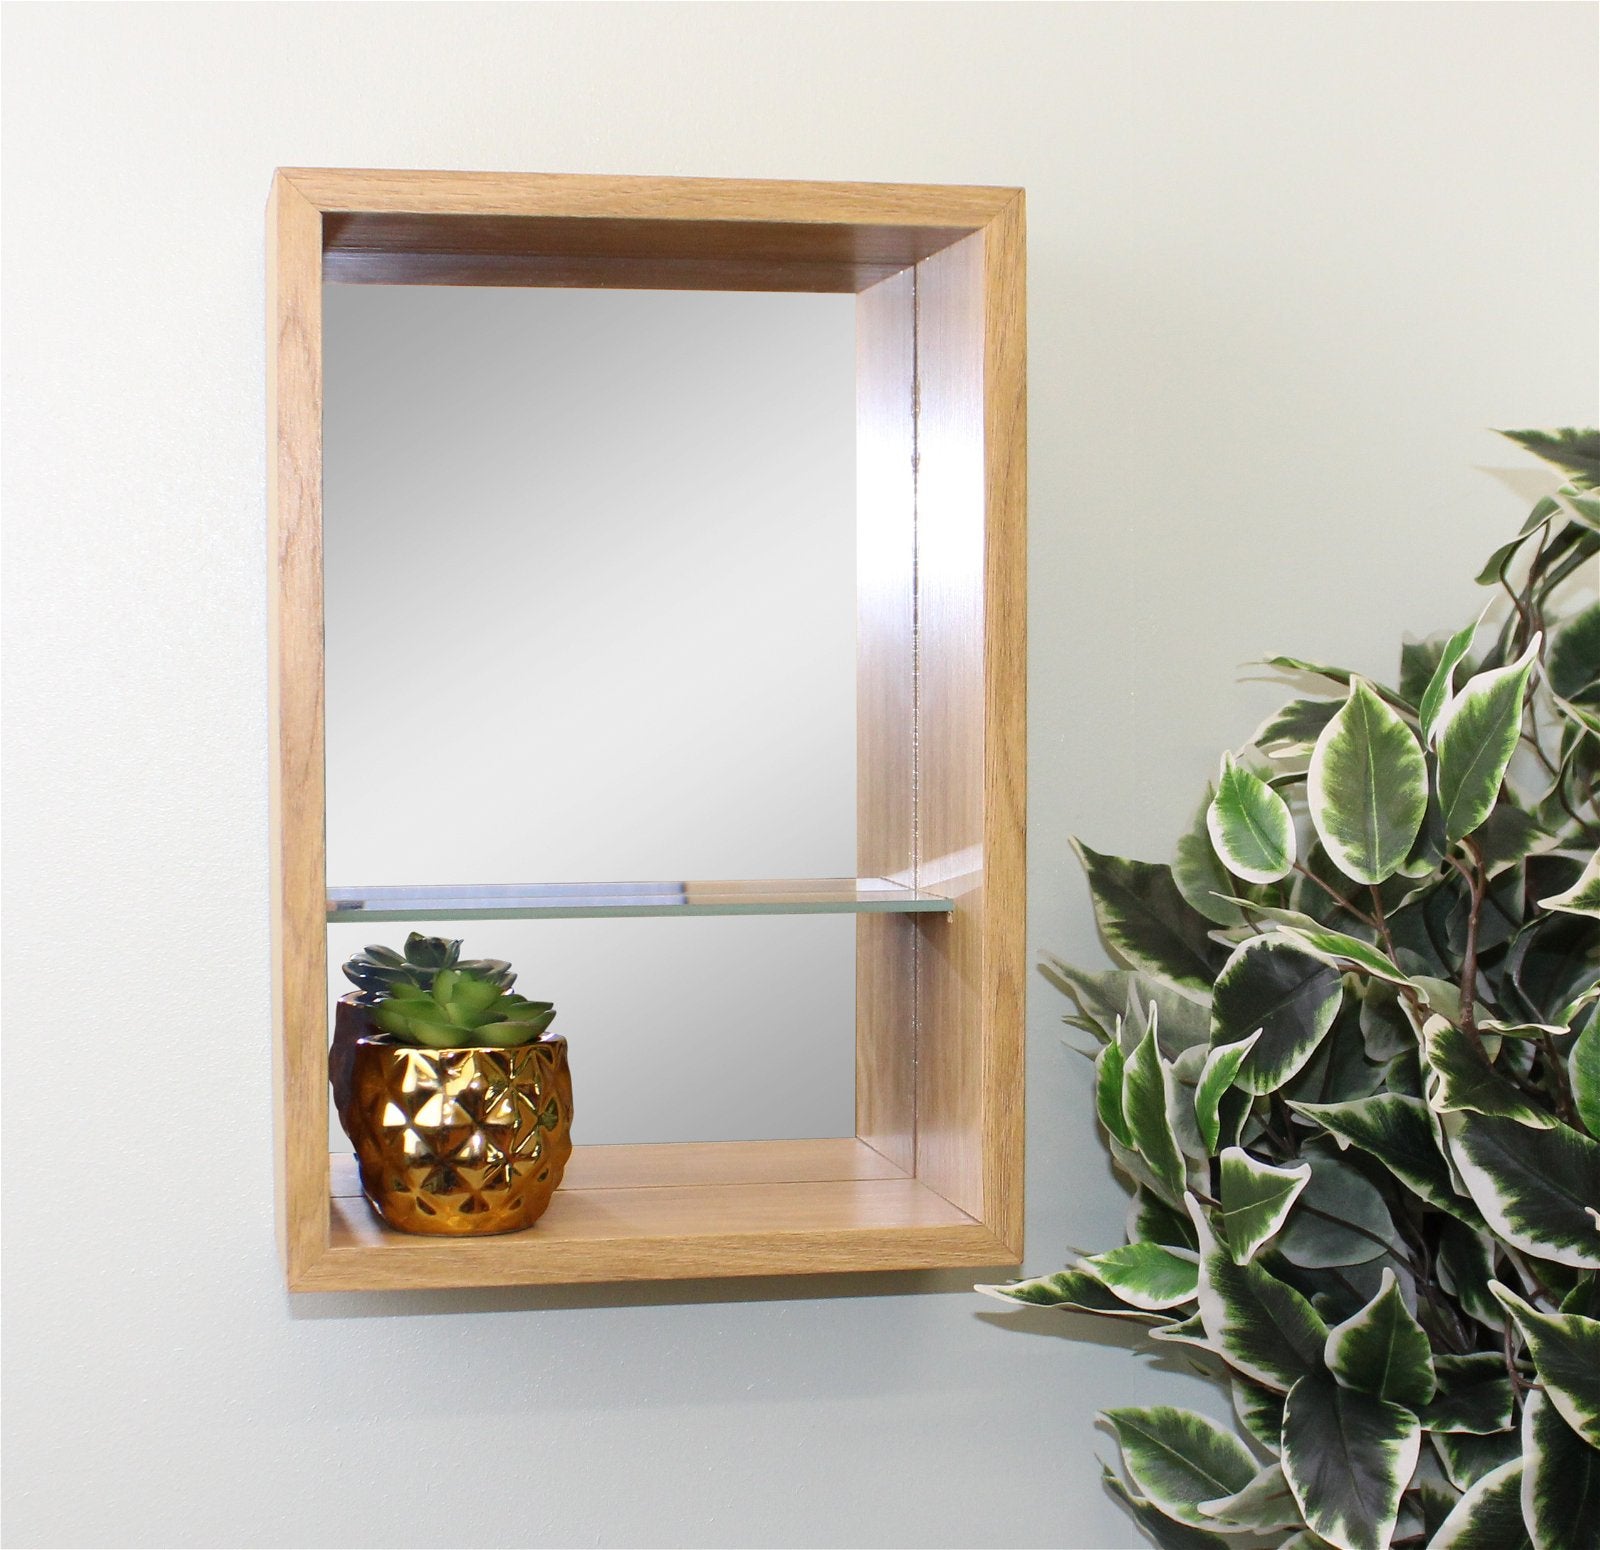 Small Veneered Mirror Shelf Unit, 31x21cm